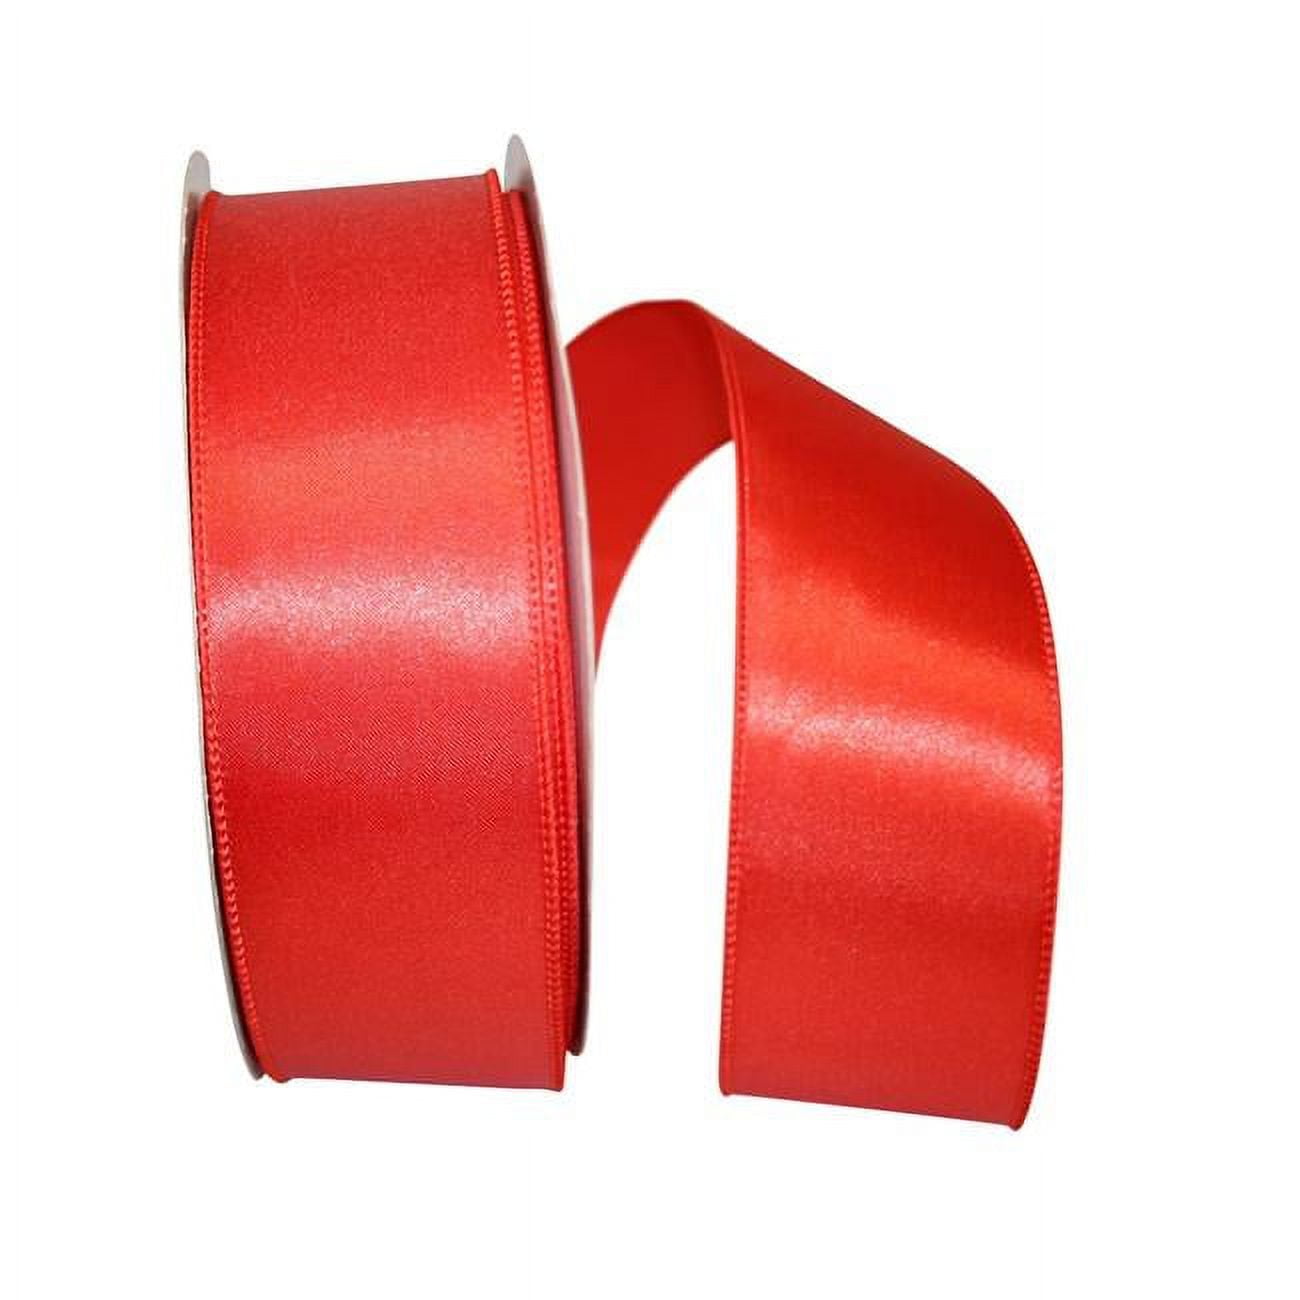 Reliant Ribbon 5150-286-09K 1.5 in. 50 Yards Single Face Satin Ribbon, Purple Haze